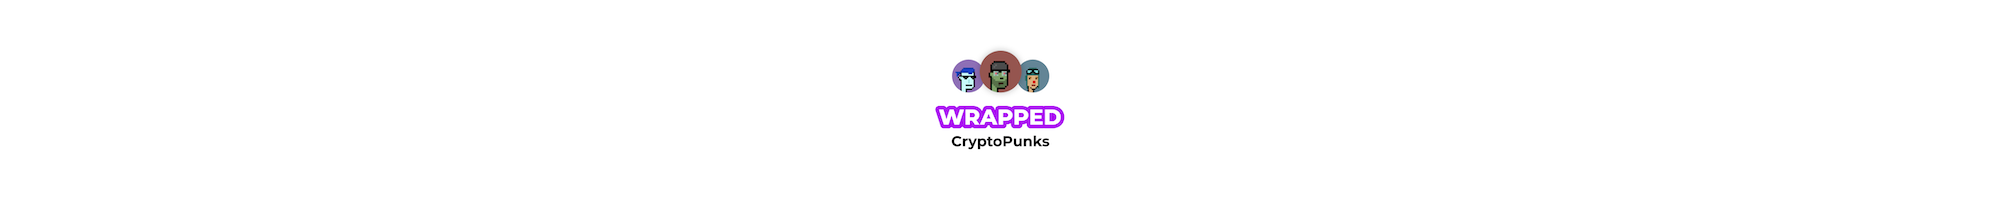 Wrapped Cryptopunks background